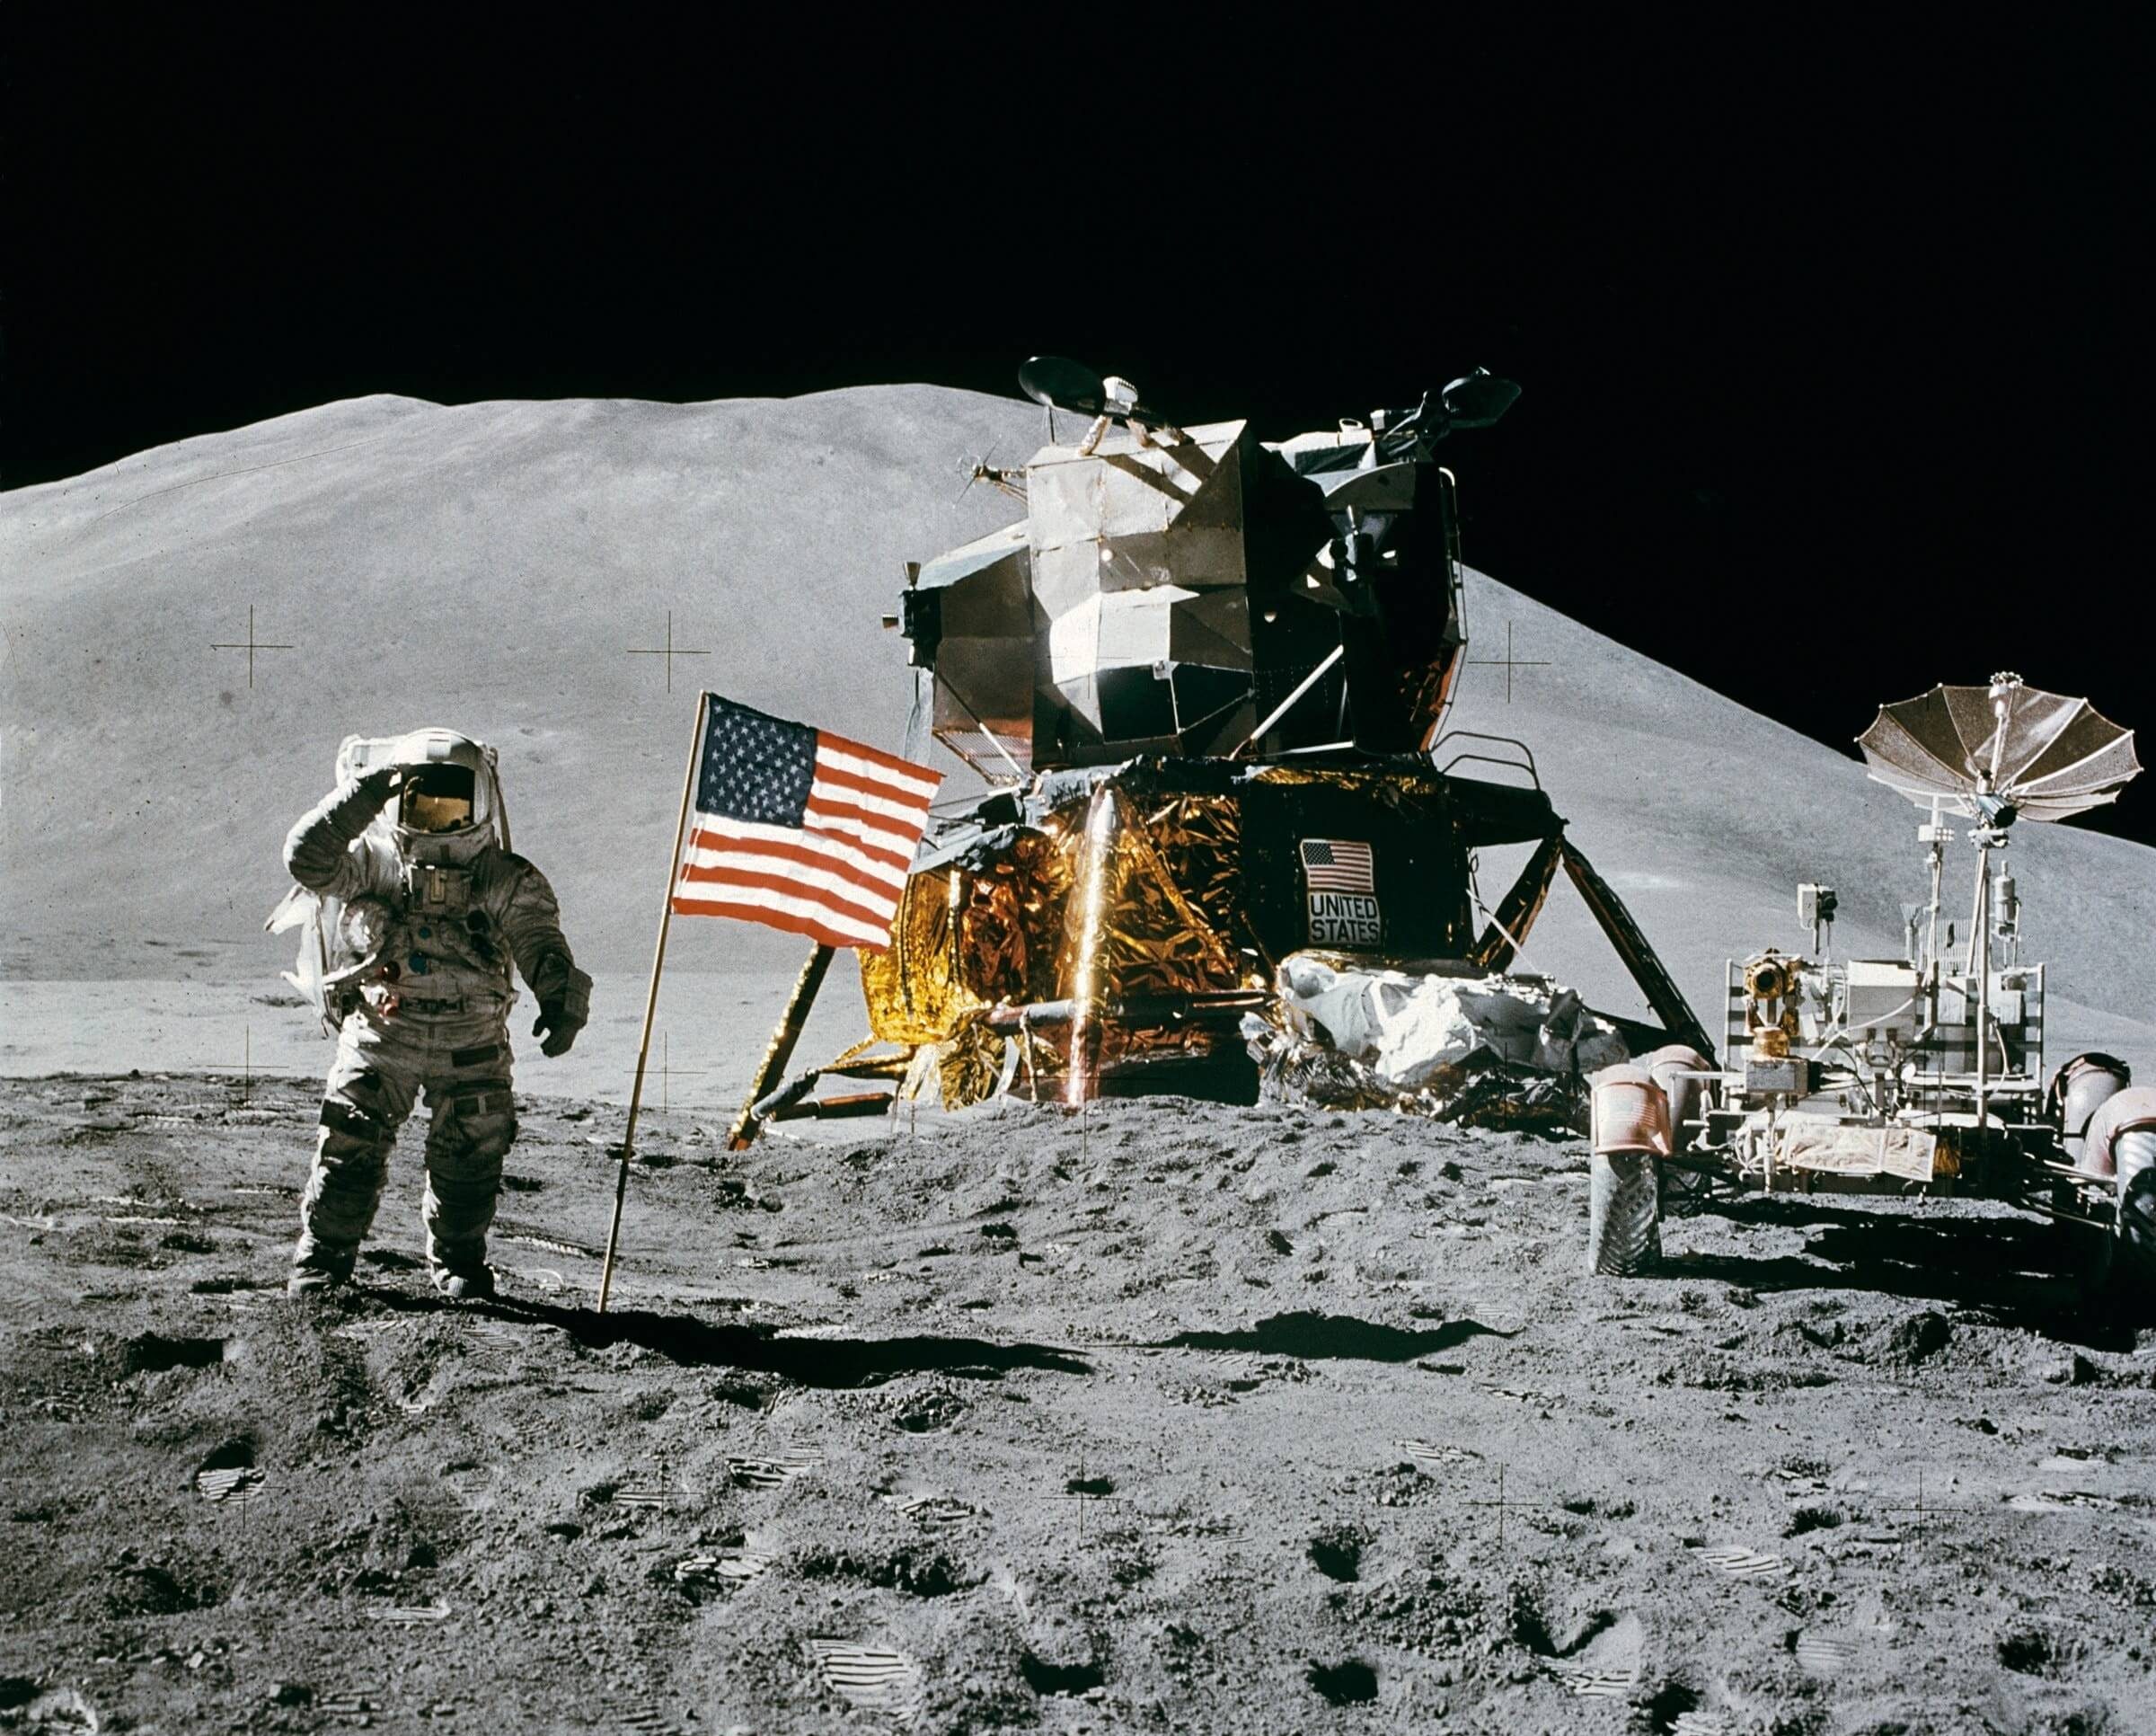 The 1969 moon landings